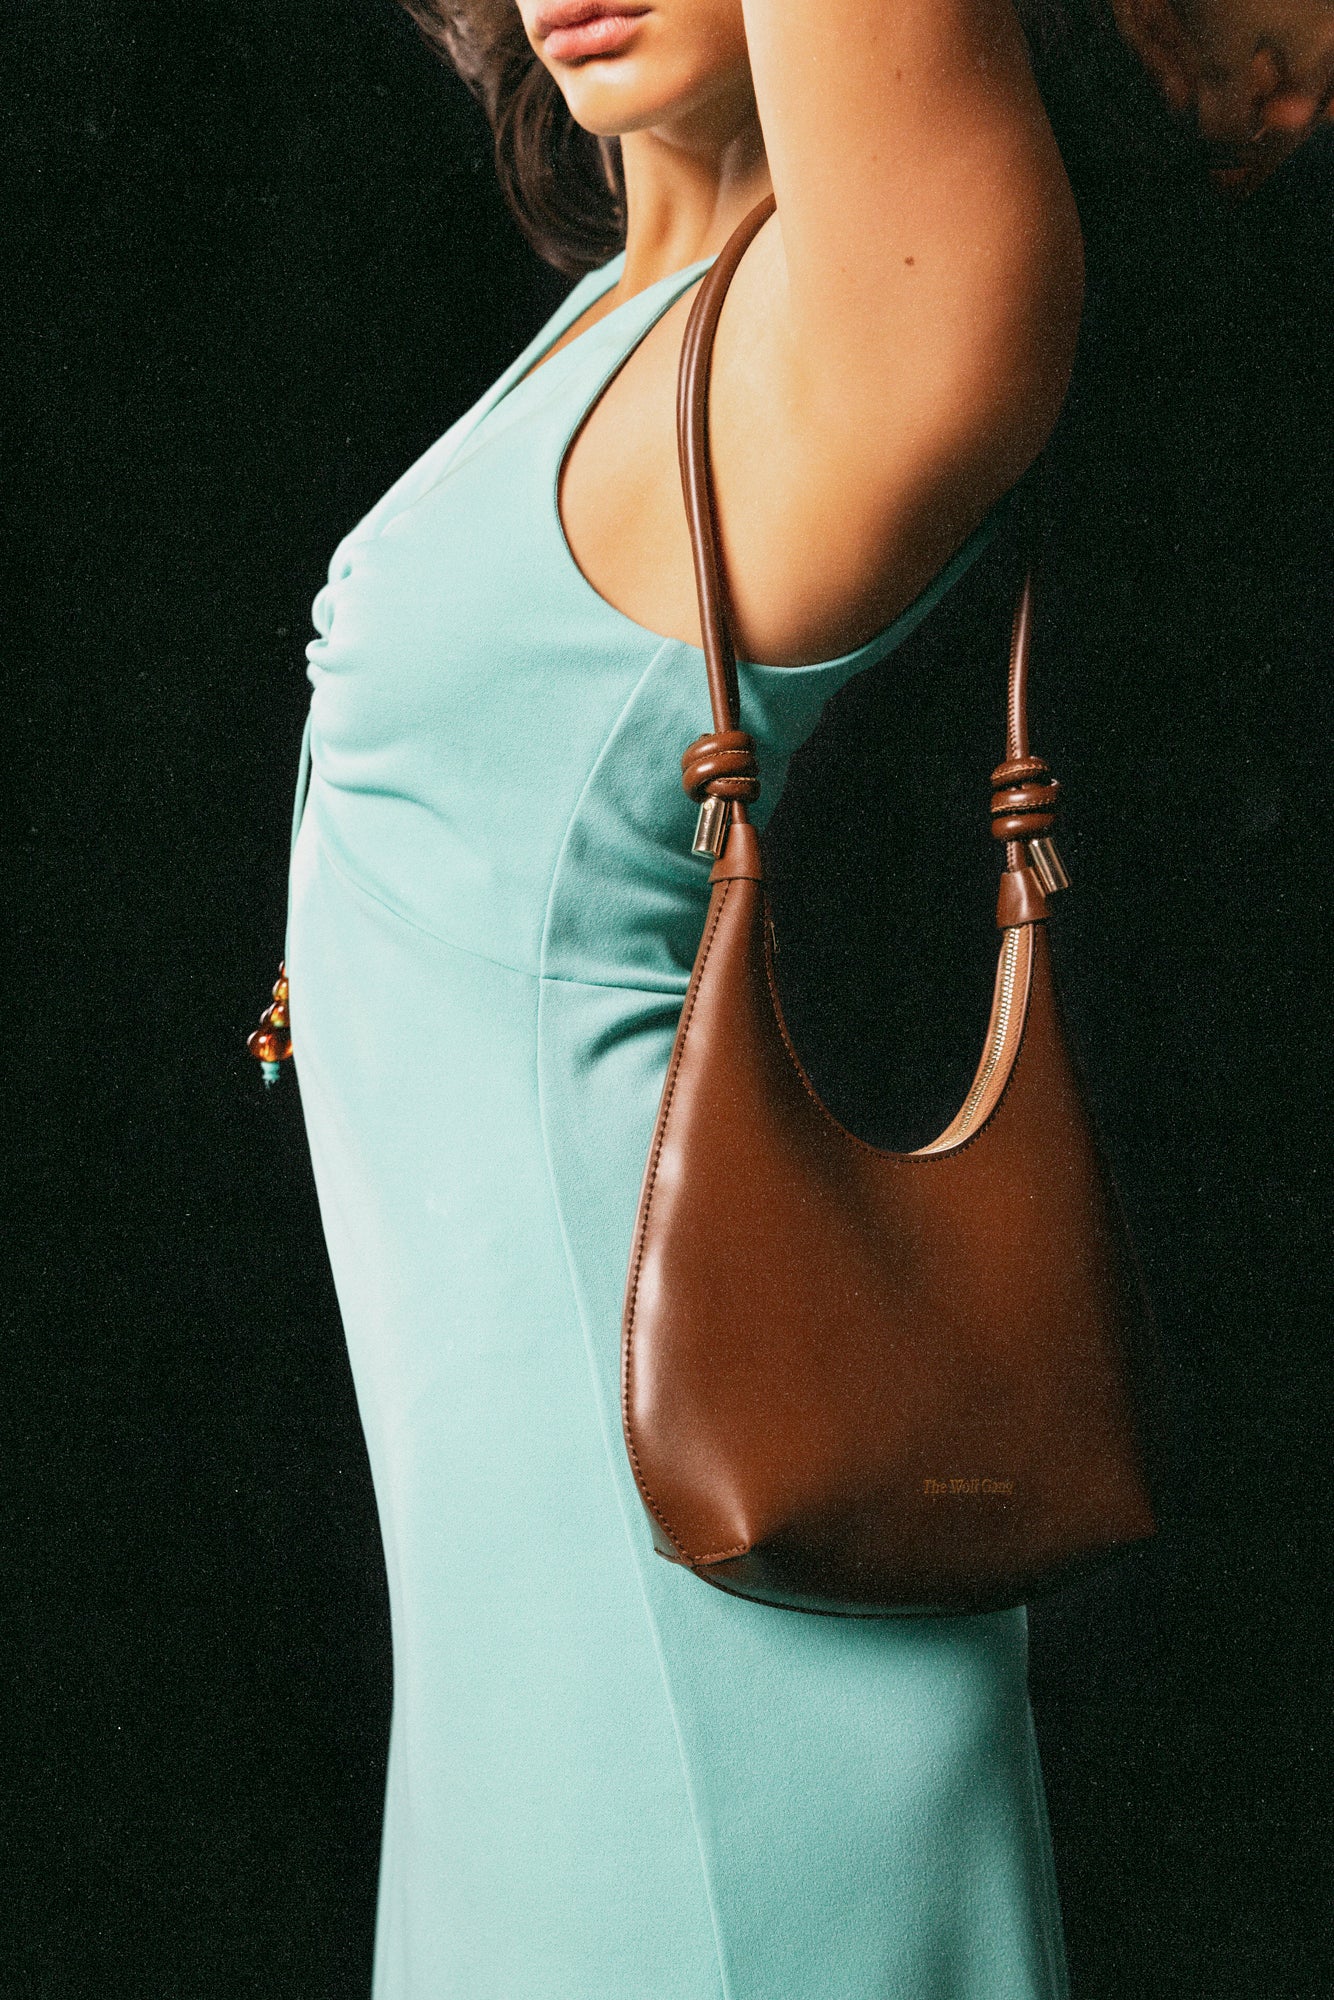 Faye Mini Shoulder Bag - Cognac